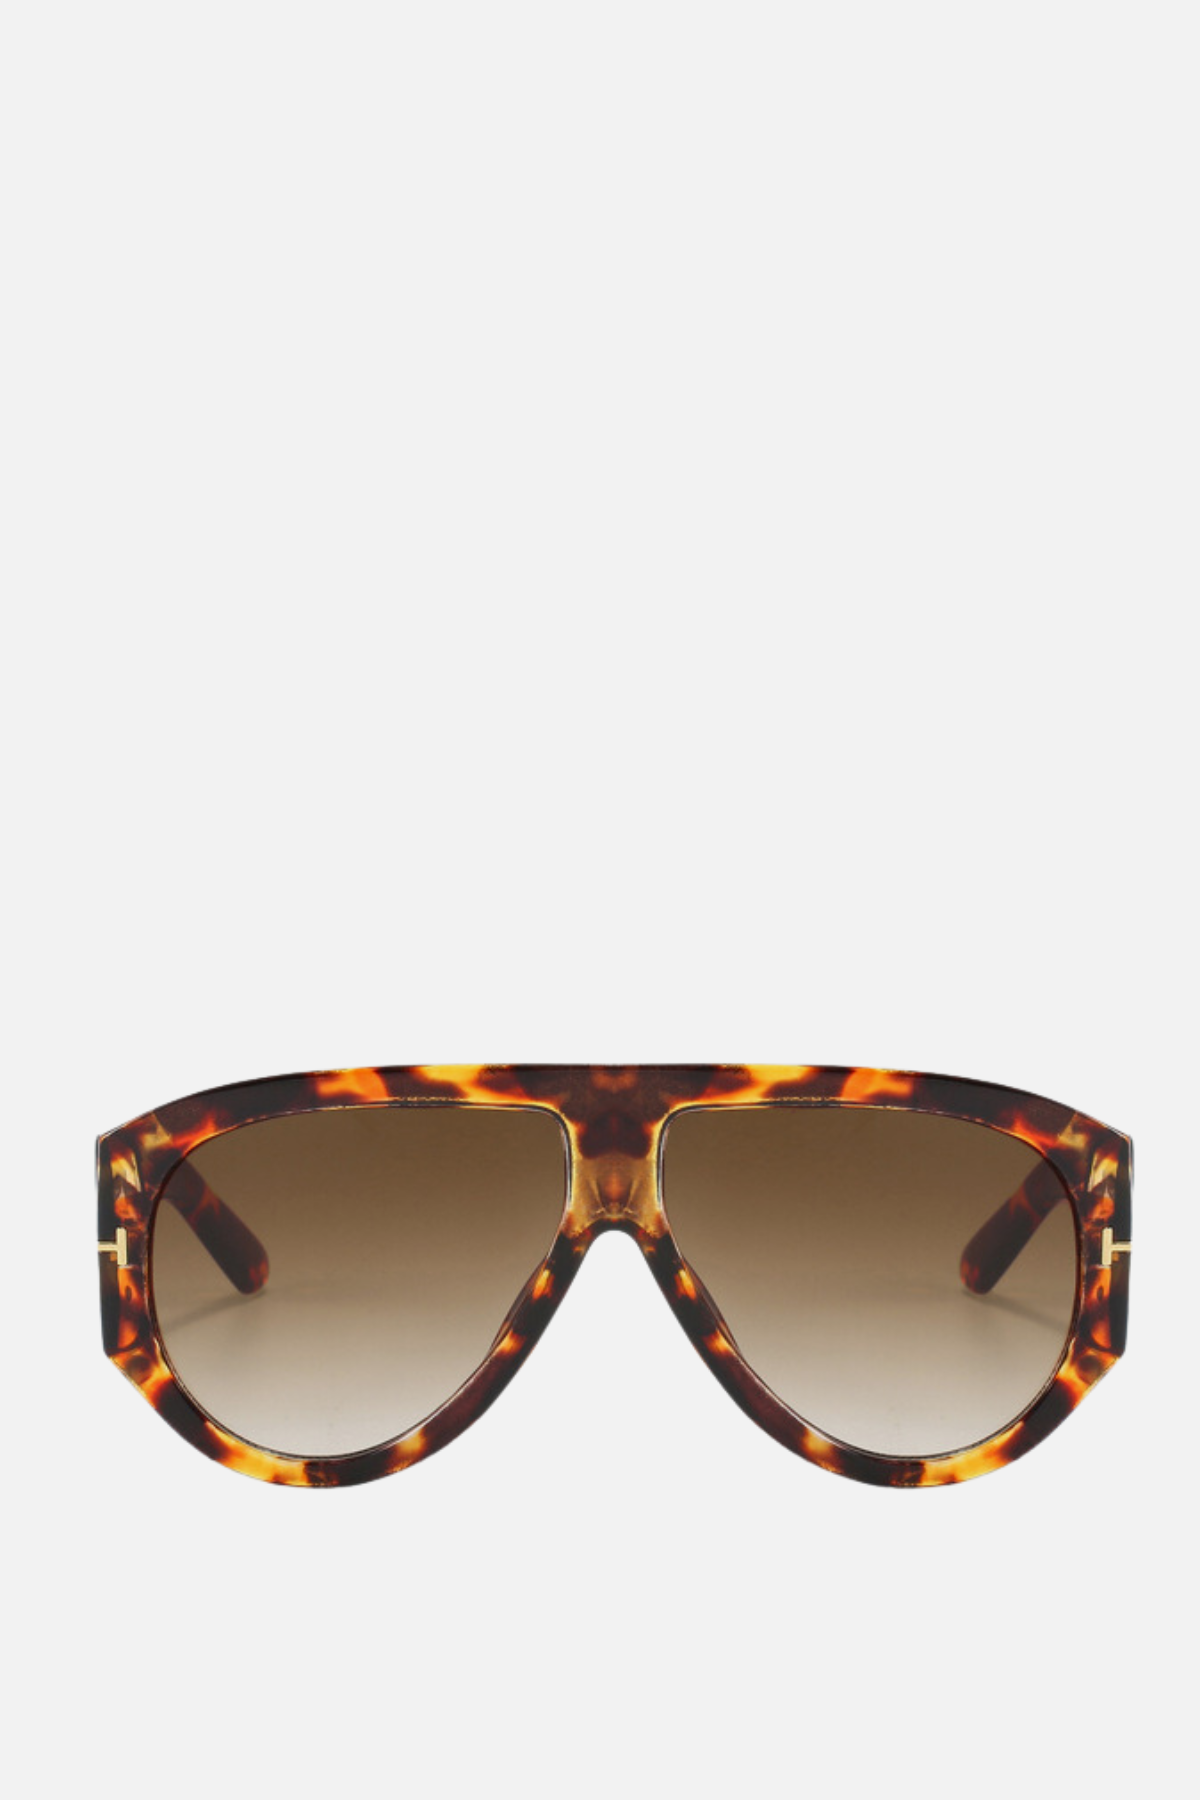 MONACO Tortoise Shell Oversized Sunglasses